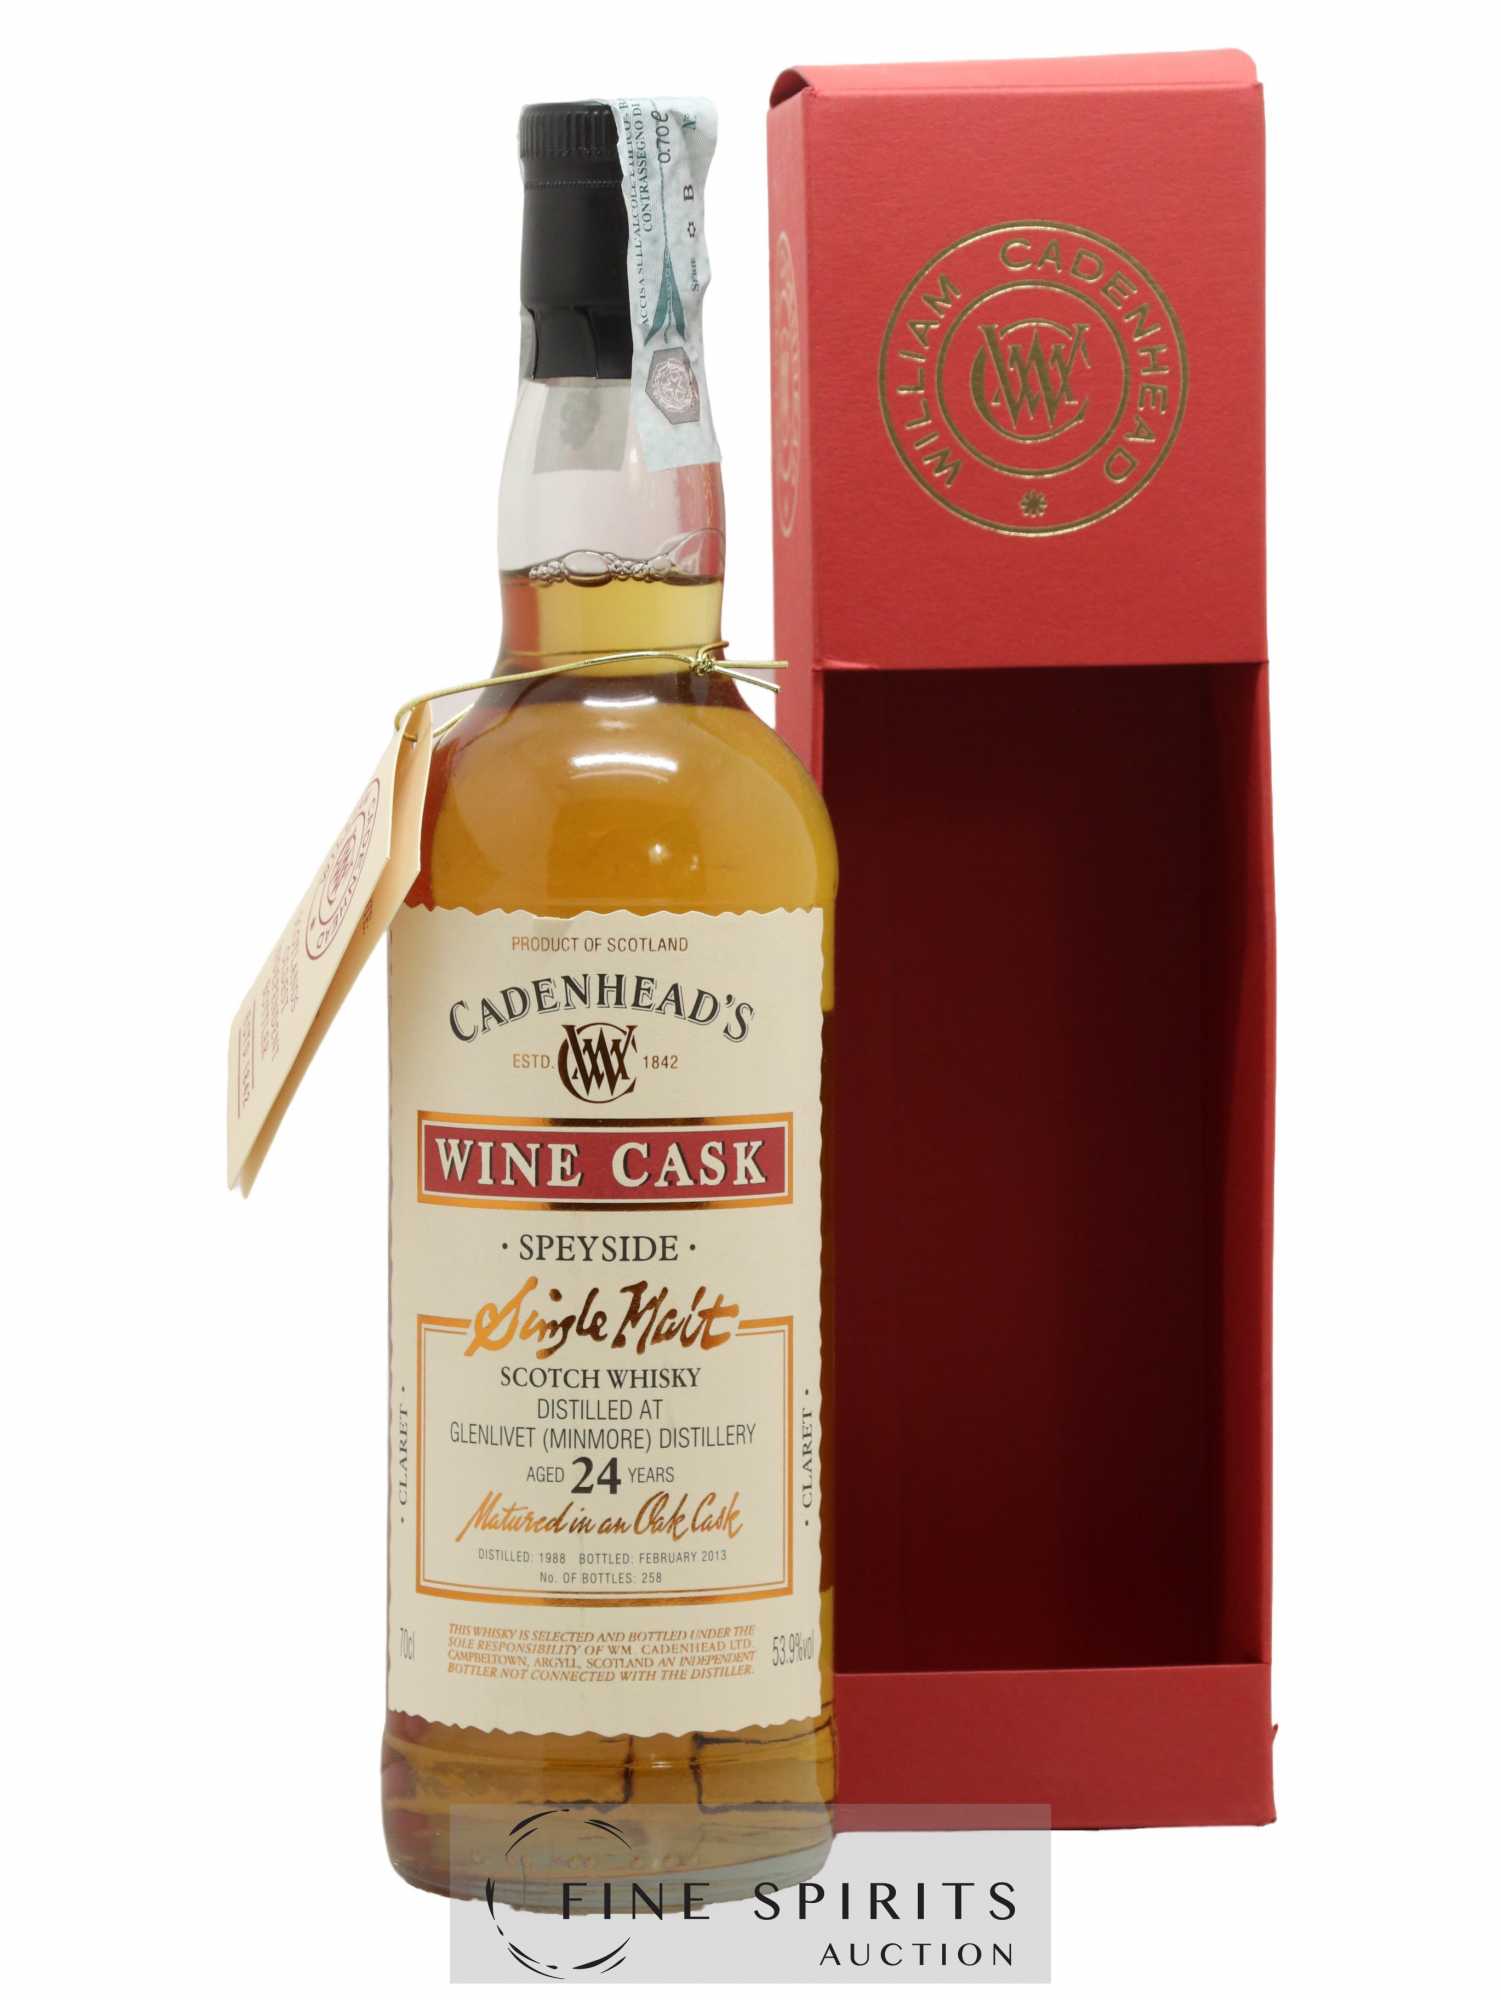 Glenlivet (Minmore) 24 years 1988 Cadenhead's Wine Cask - Claret One of 258 - bottled 2013